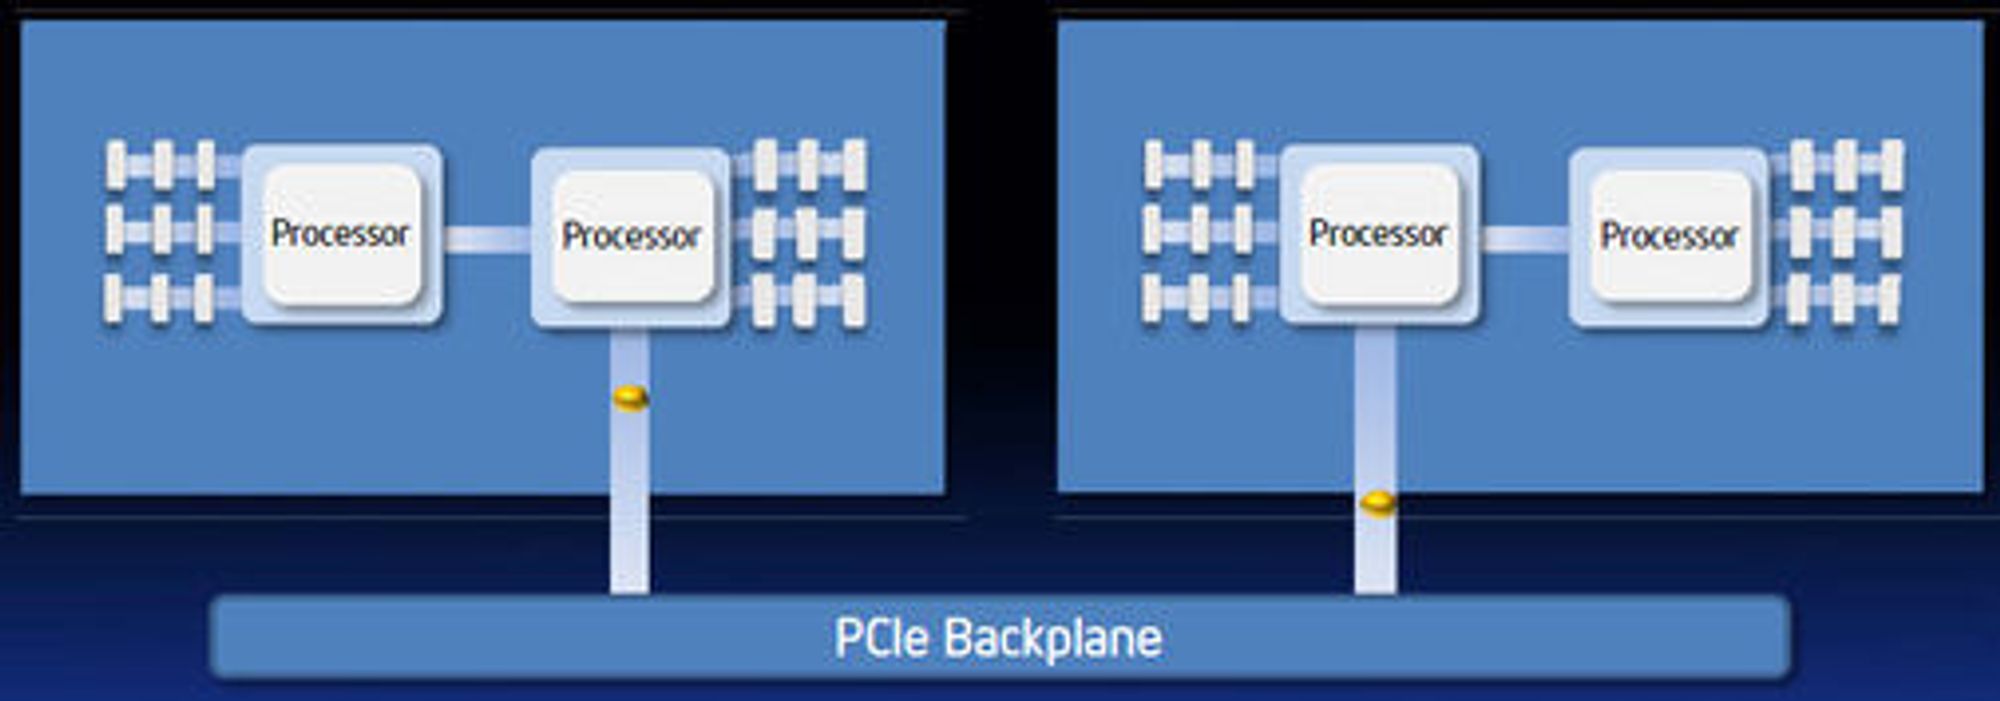 PCI Express brokobling mellom separate prosessorsystemer.